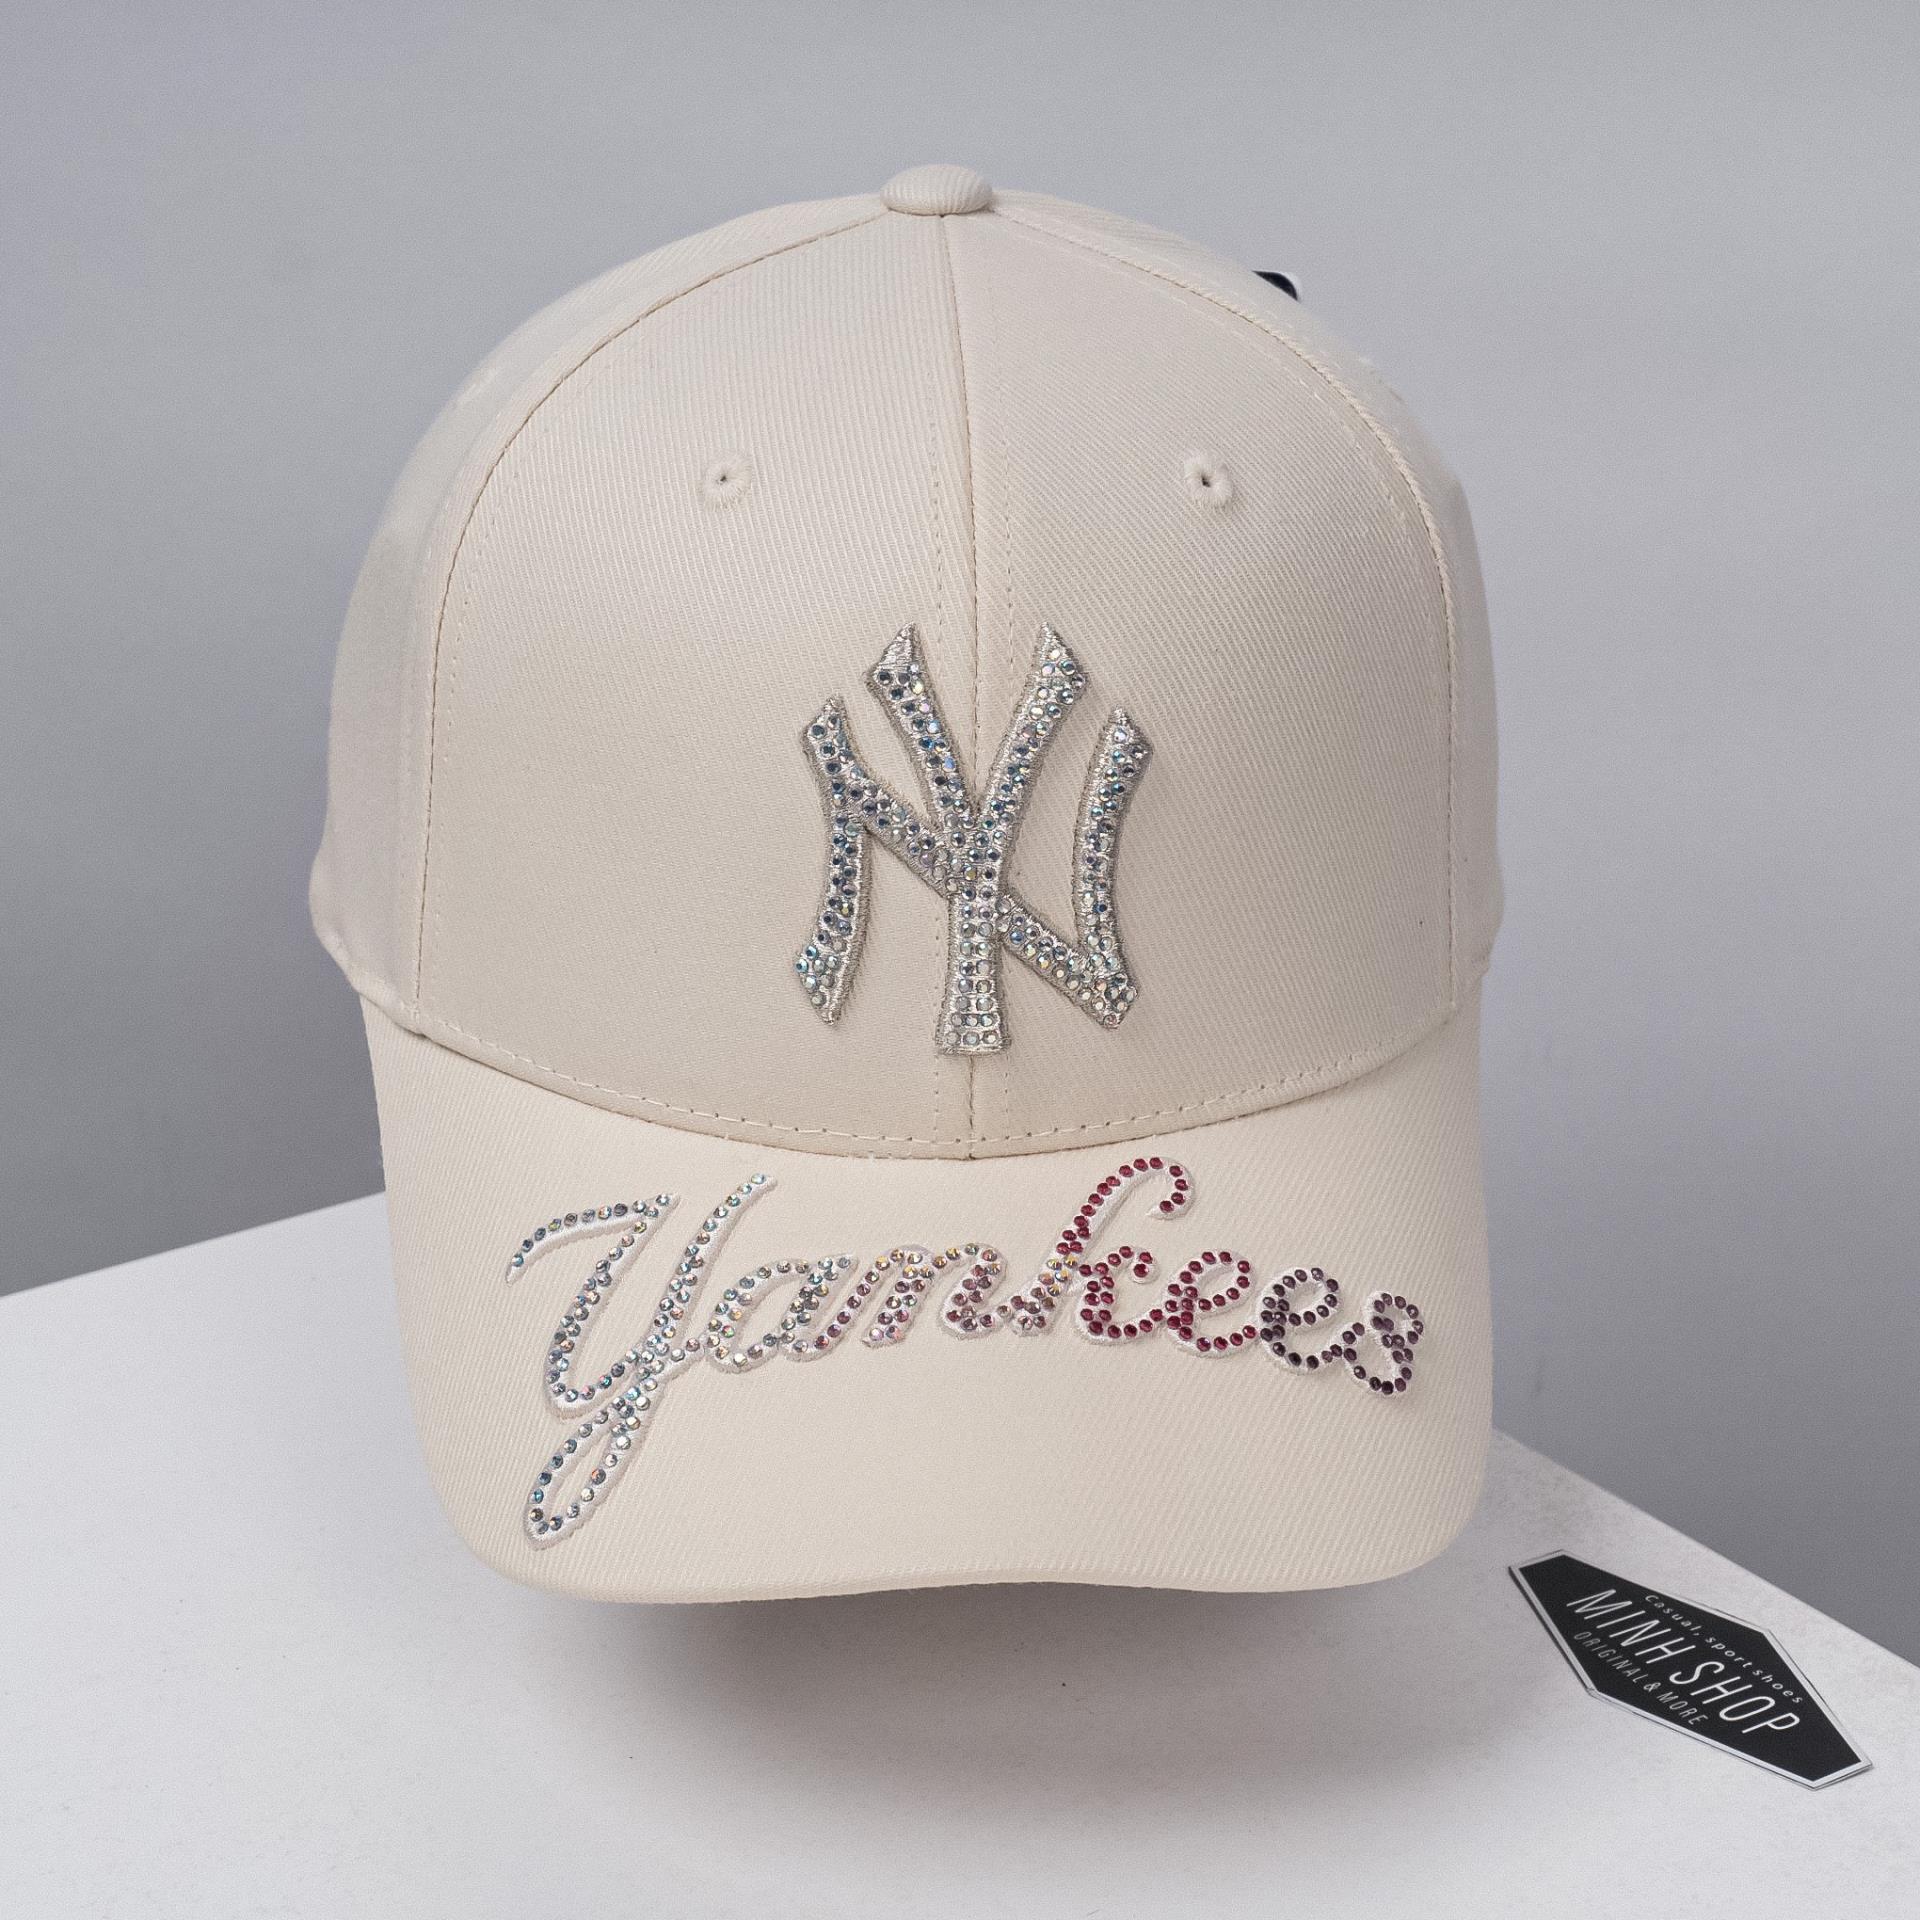 MLB NCover Ball Cap New York Yankees